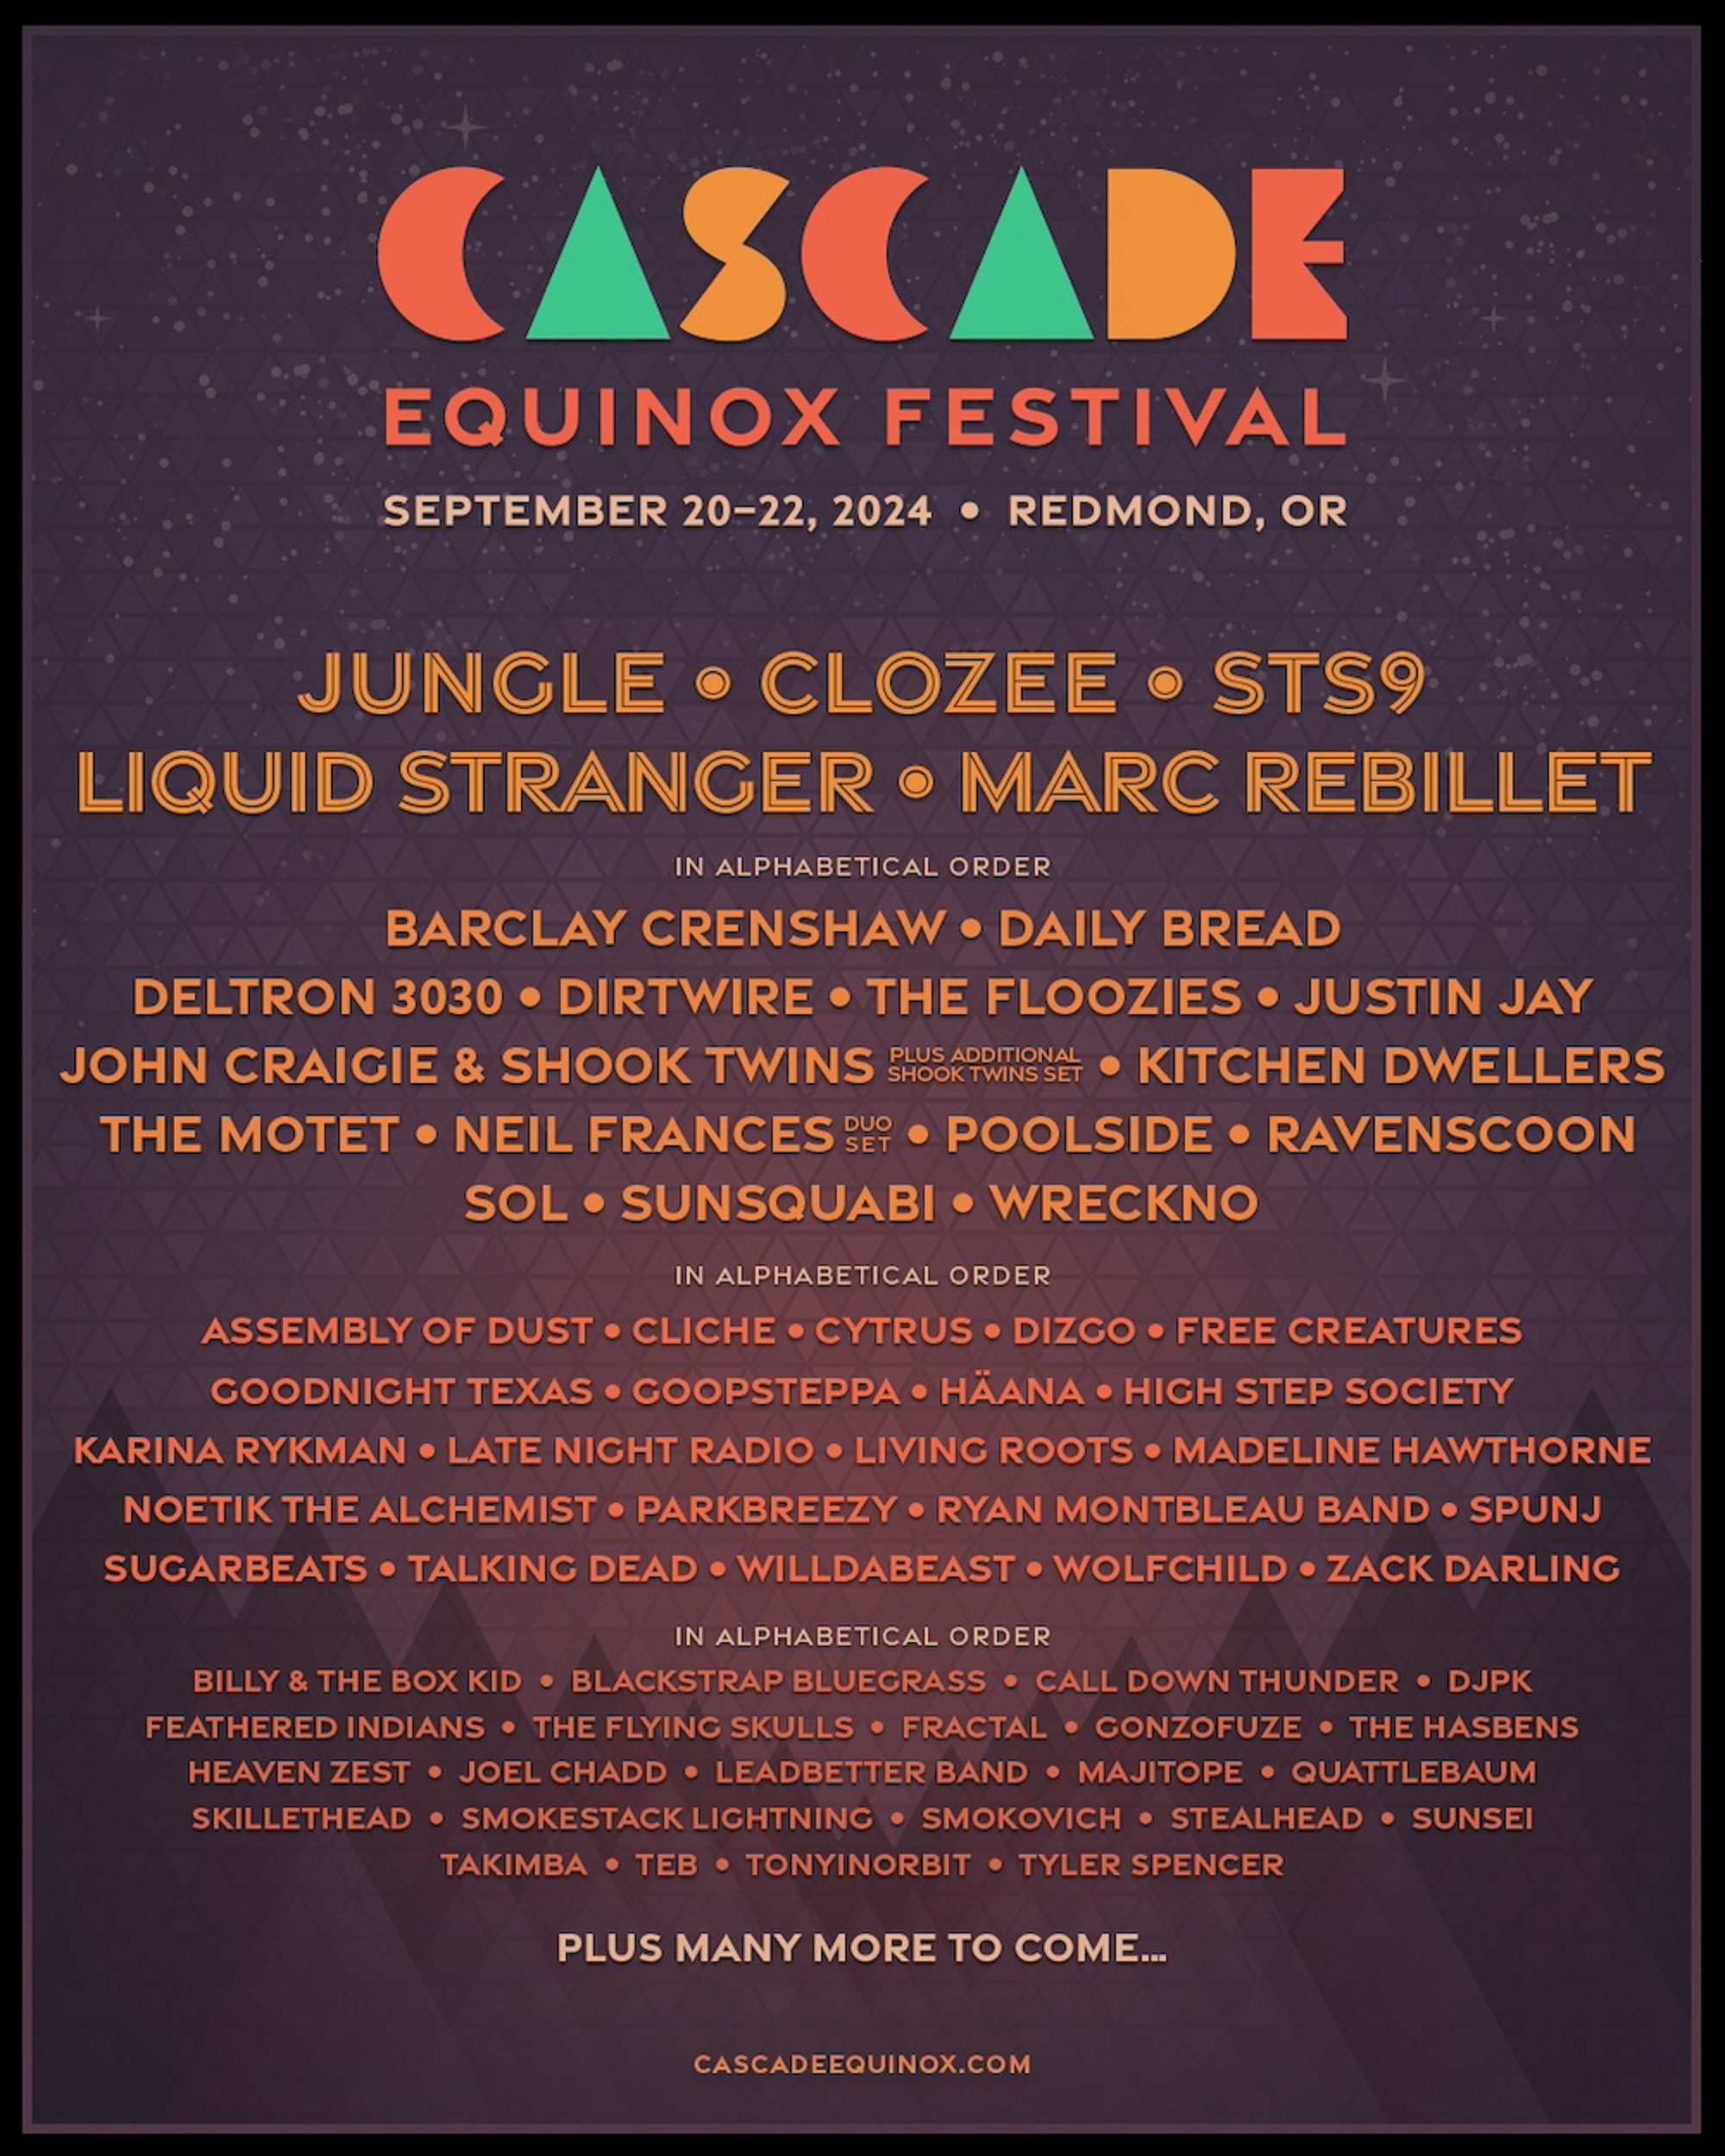 Cascade Equinox Festival Returns with Genre-Blending Lineup and Unique Experiences